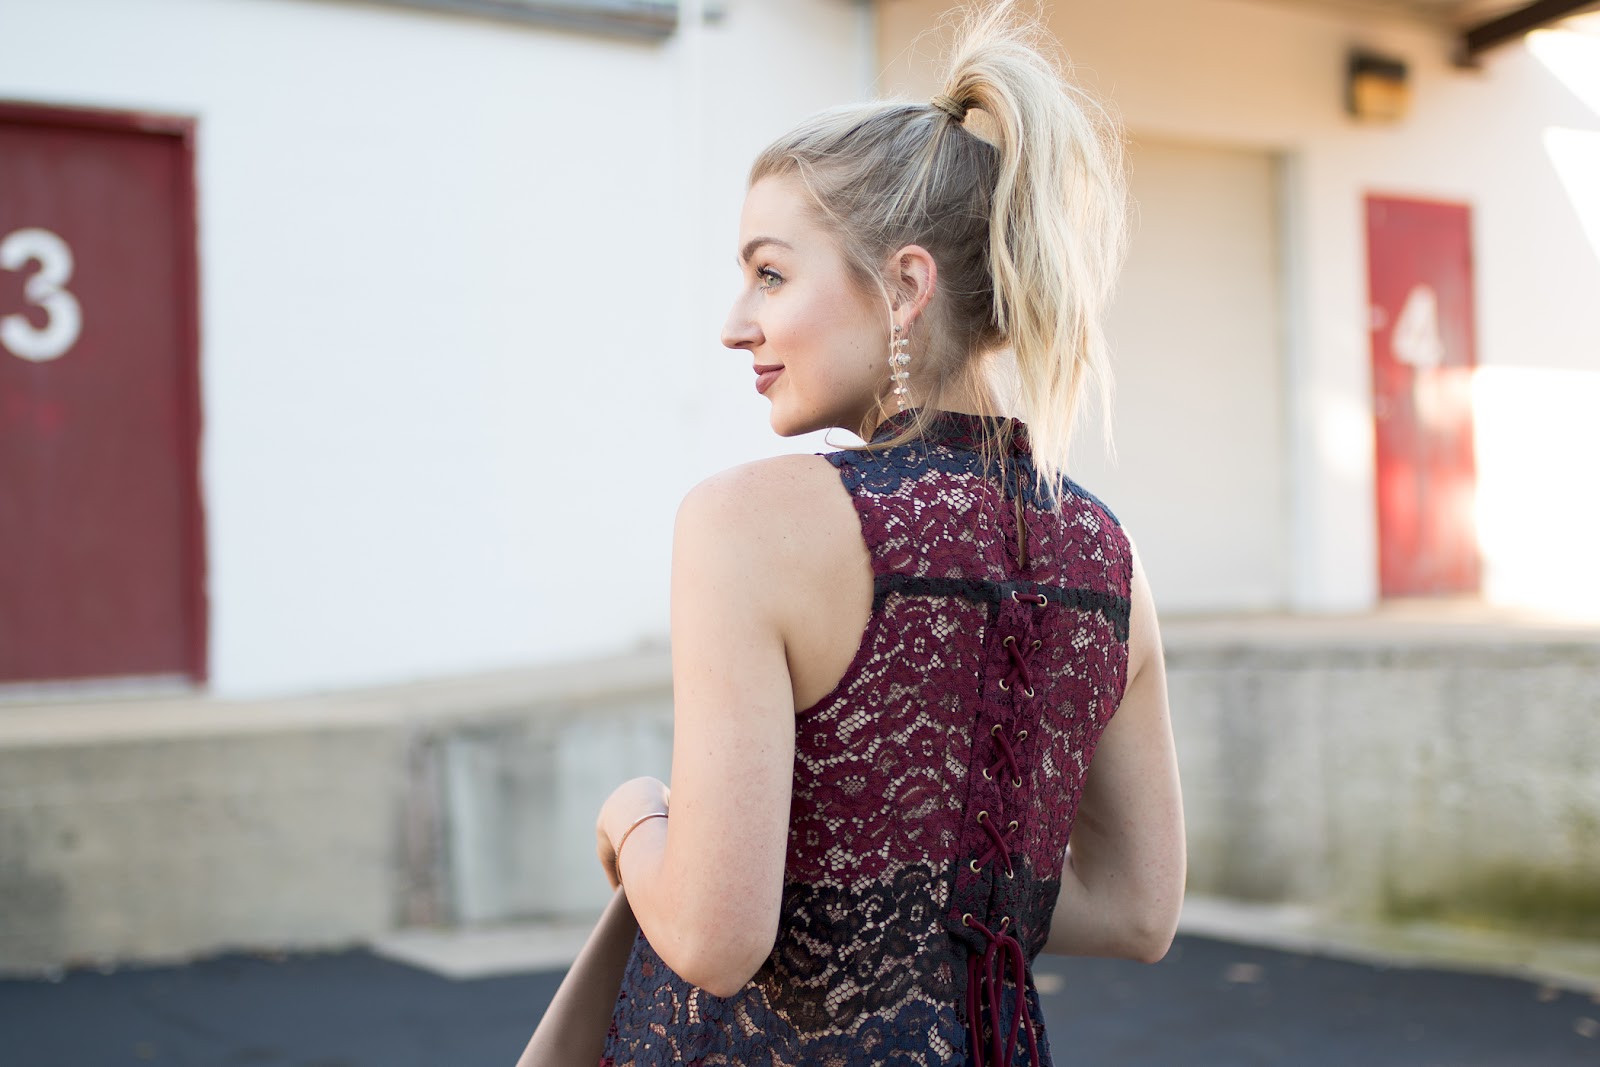 Burgundy lace dress